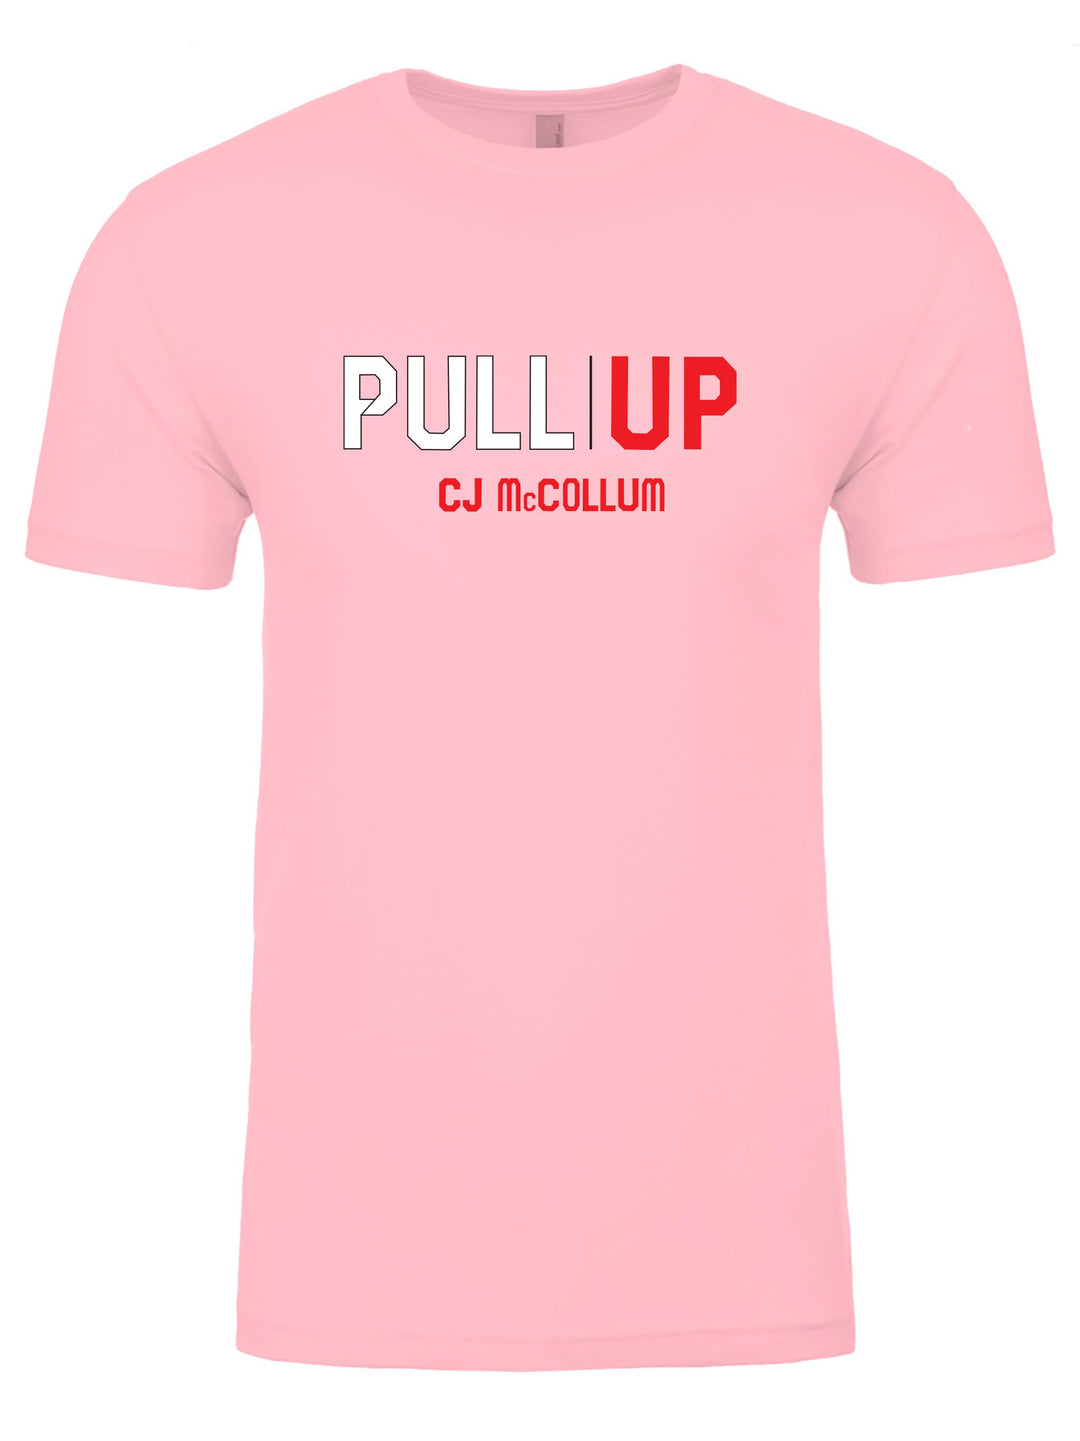 Pull Up Podcast Unisex T-Shirt